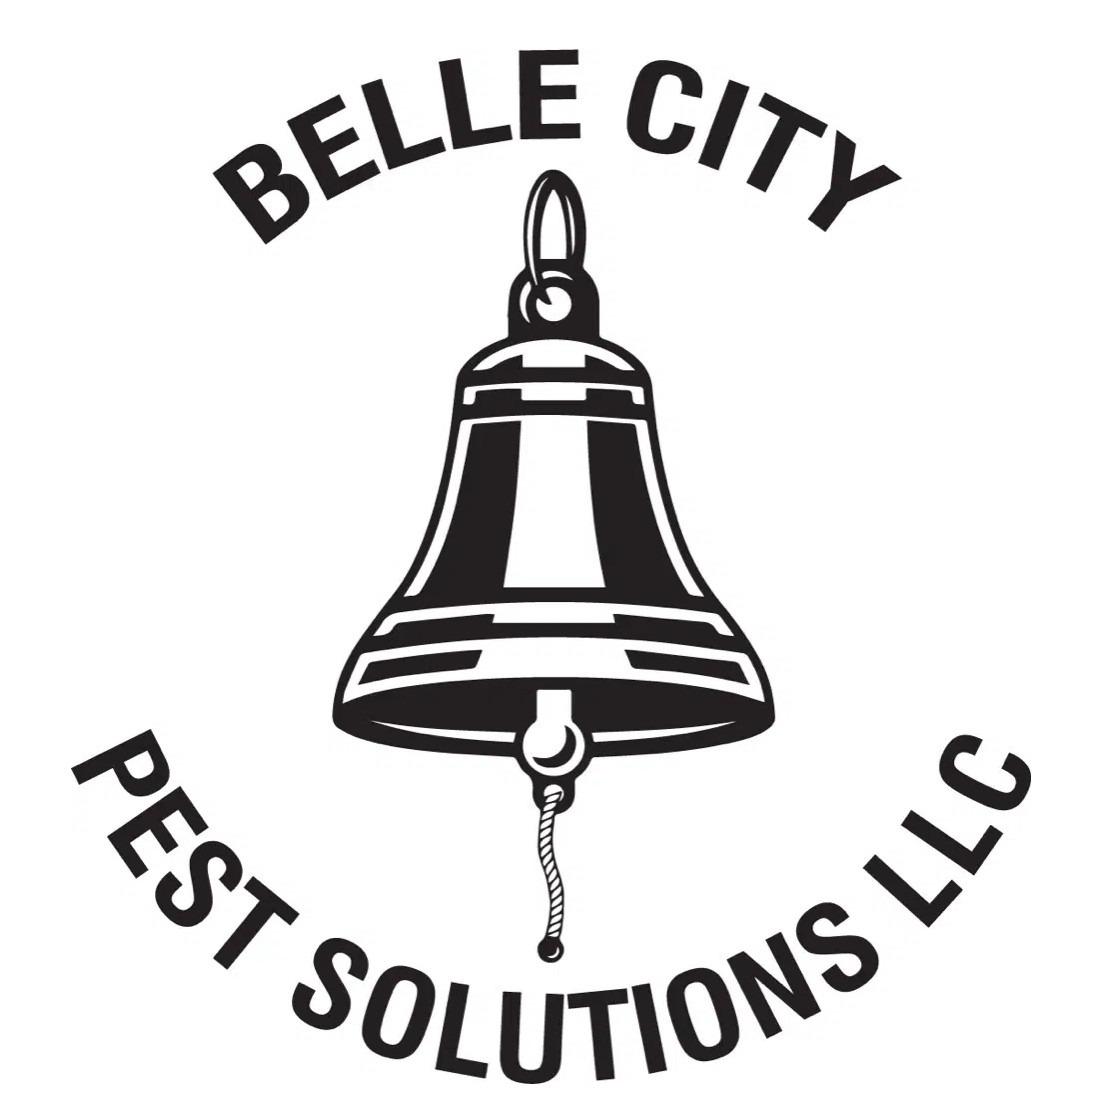 Belle City Pest Solutions LLC - Franksville, WI - (414)303-8775 | ShowMeLocal.com